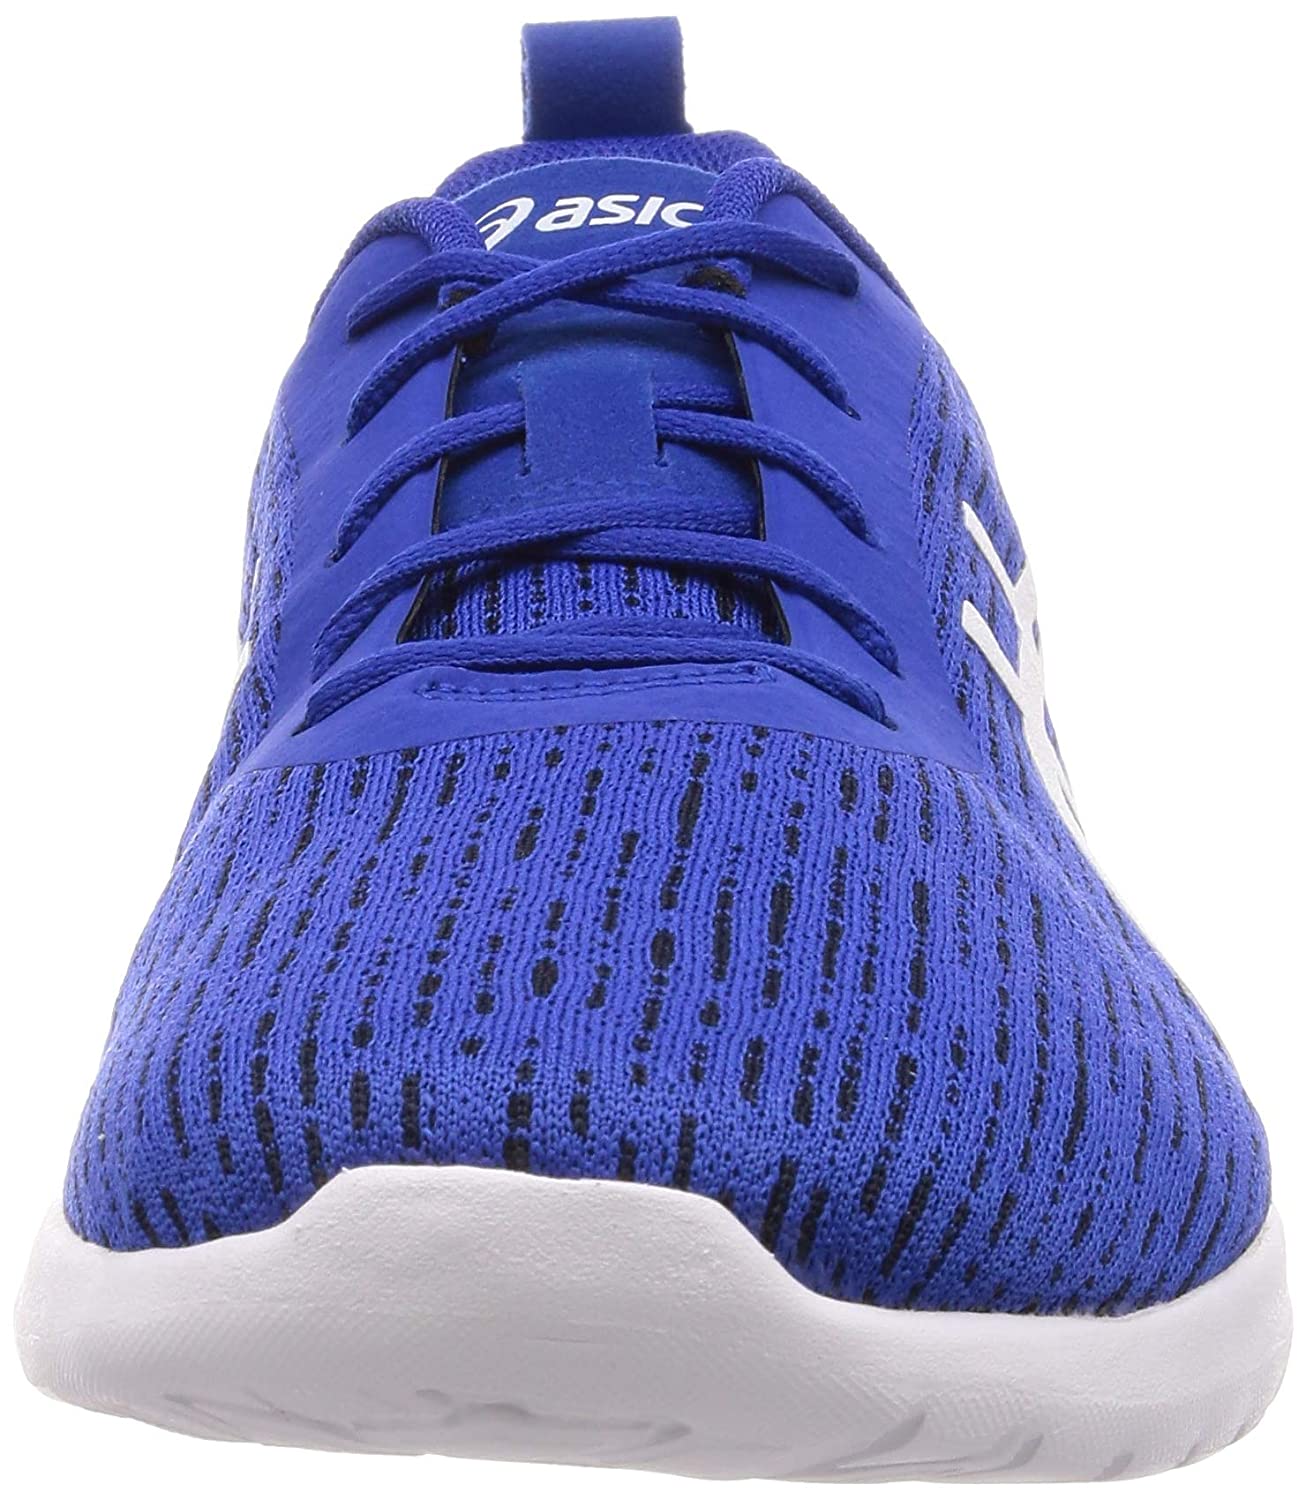 Asics Kanmei 2 Running Shoes - Blue/White - Best Price online Prokicksports.com